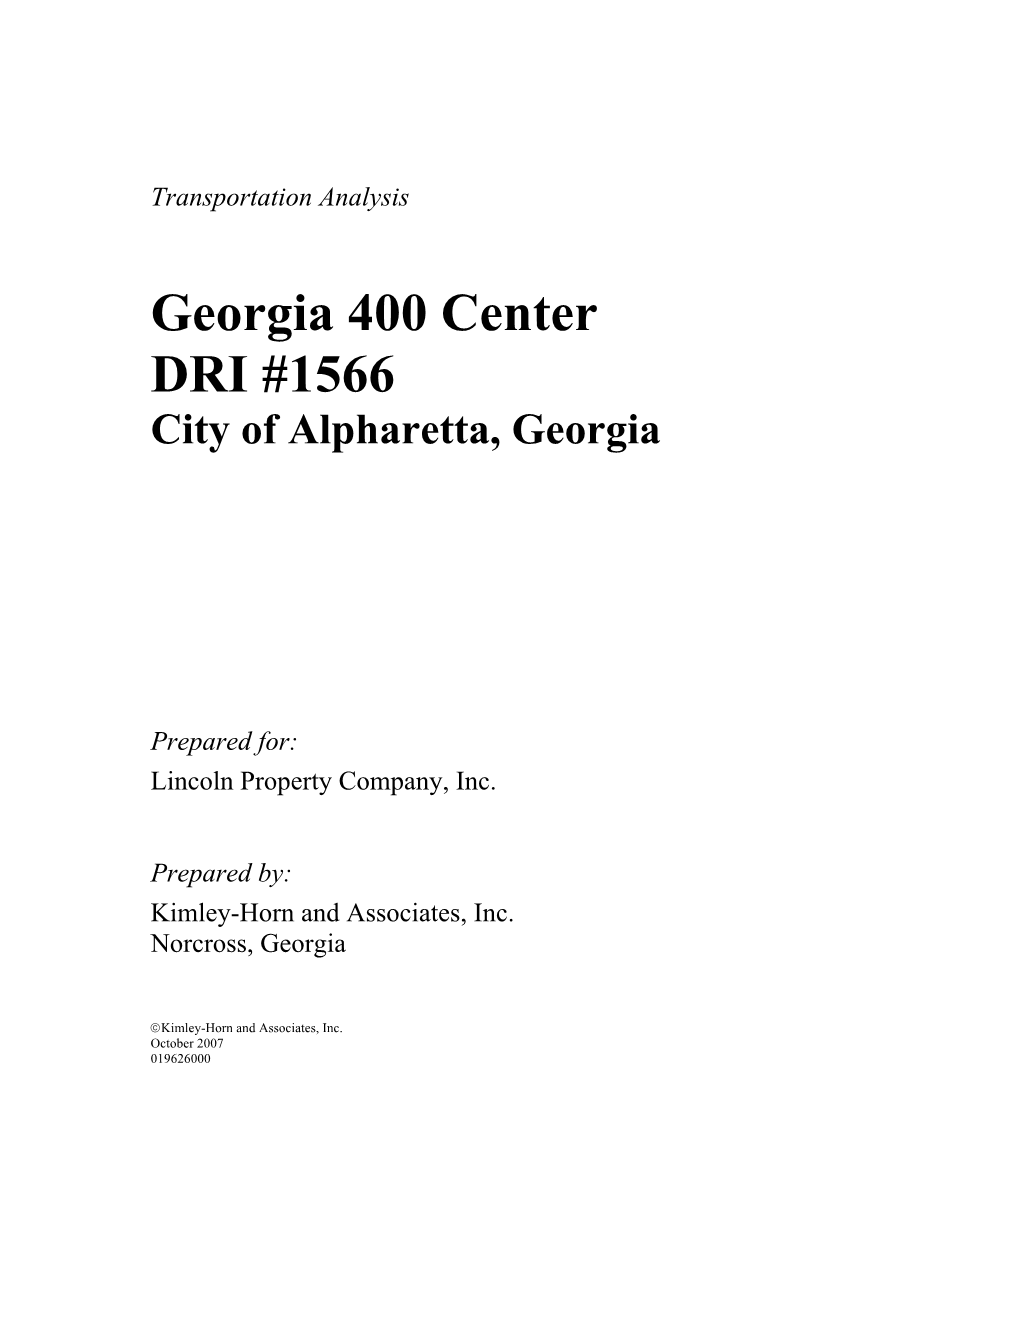 Georgia 400 Center DRI #1566 City of Alpharetta, Georgia